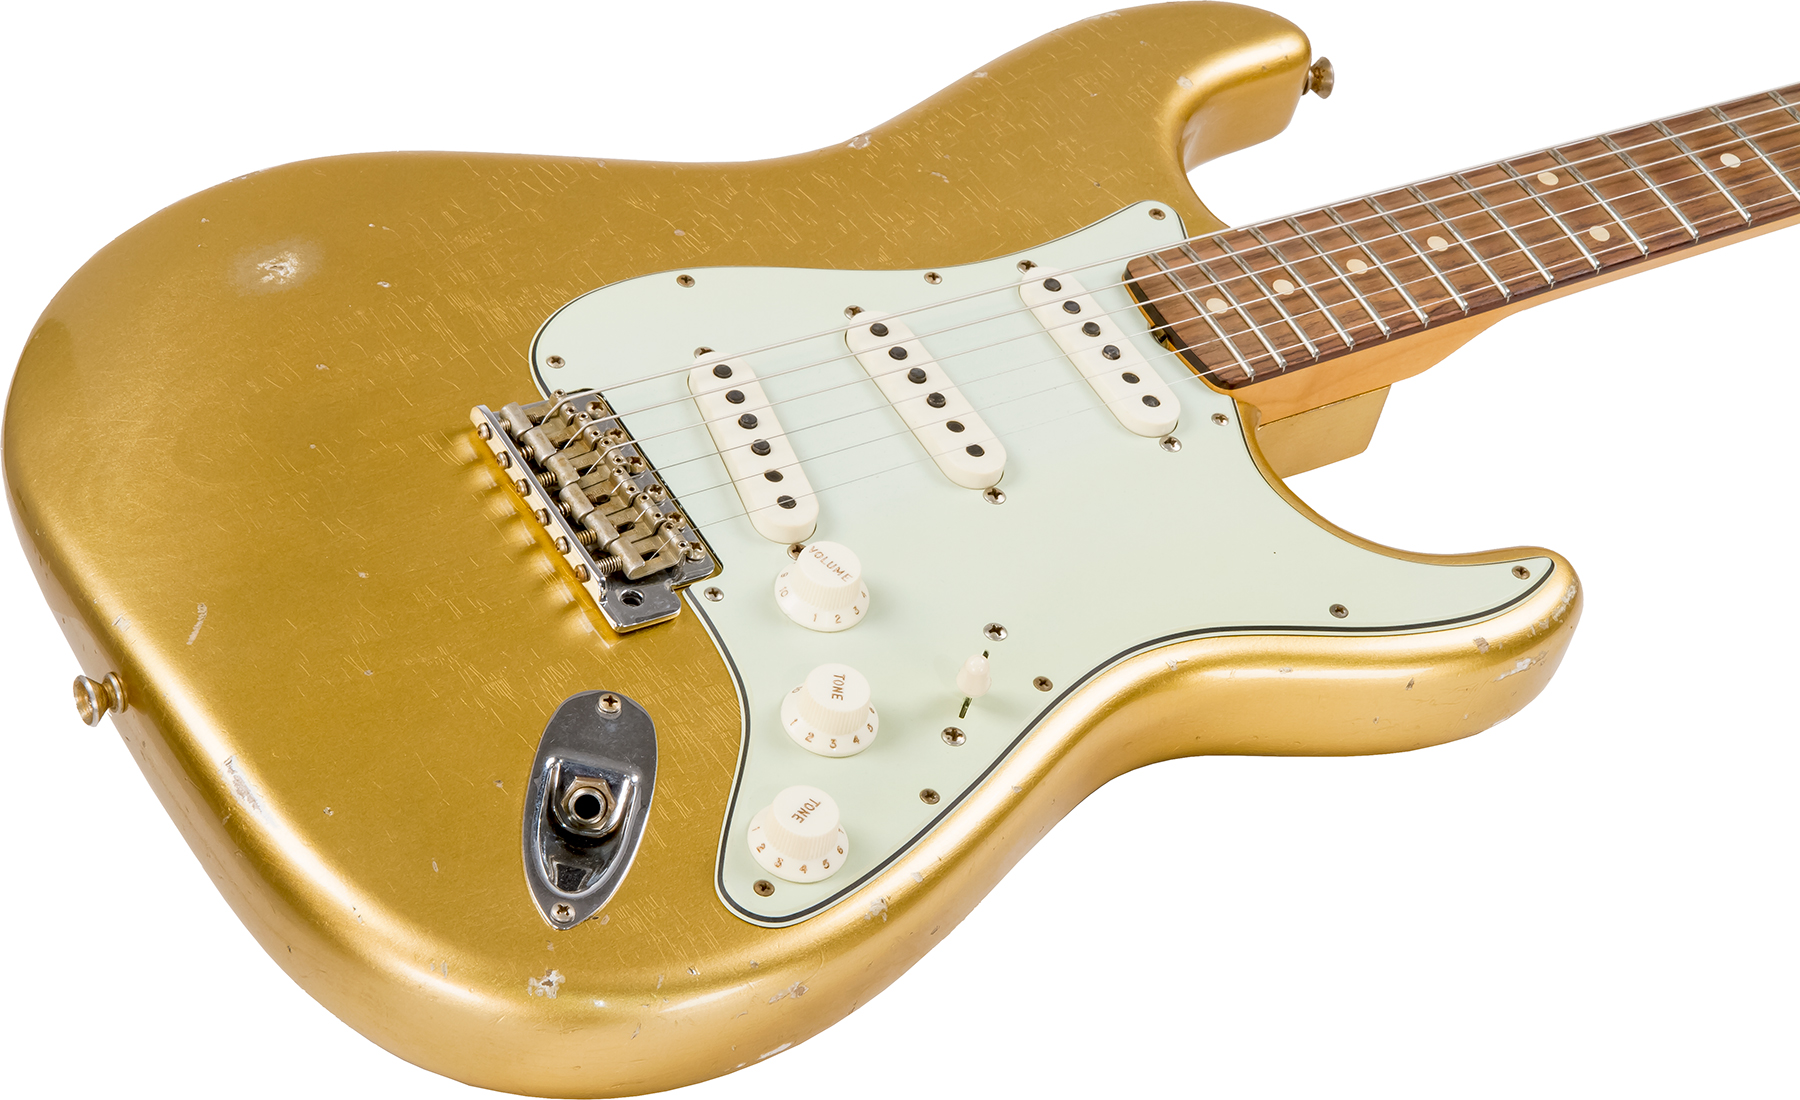 Fender Custom Shop Strat 1960 Rw #cz544406 - Relic Aztec Gold - E-Gitarre in Str-Form - Variation 2